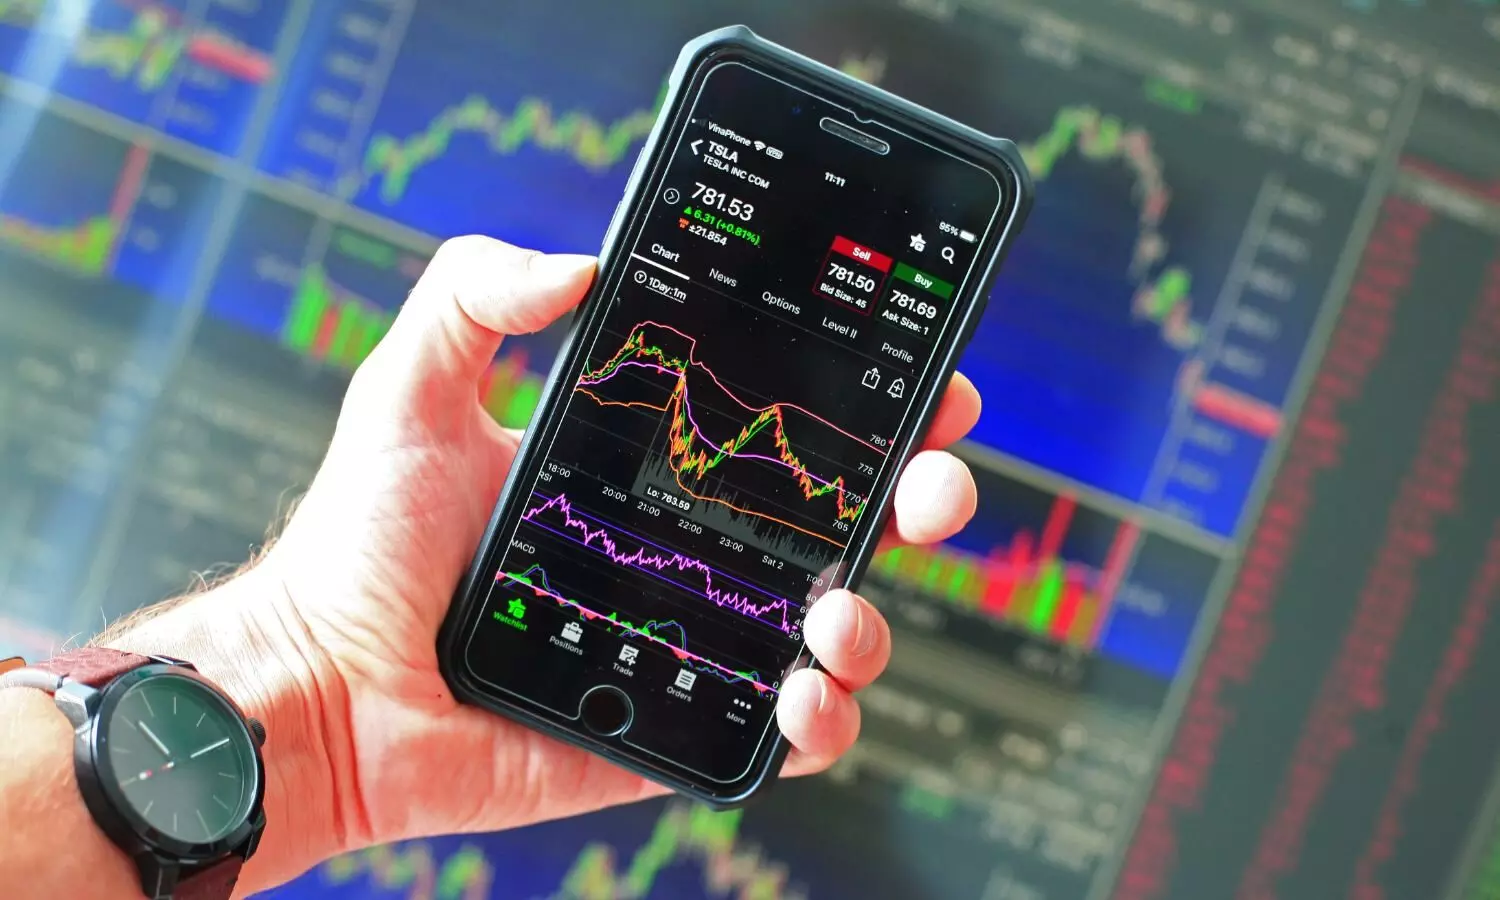 Stock market trading via mobile